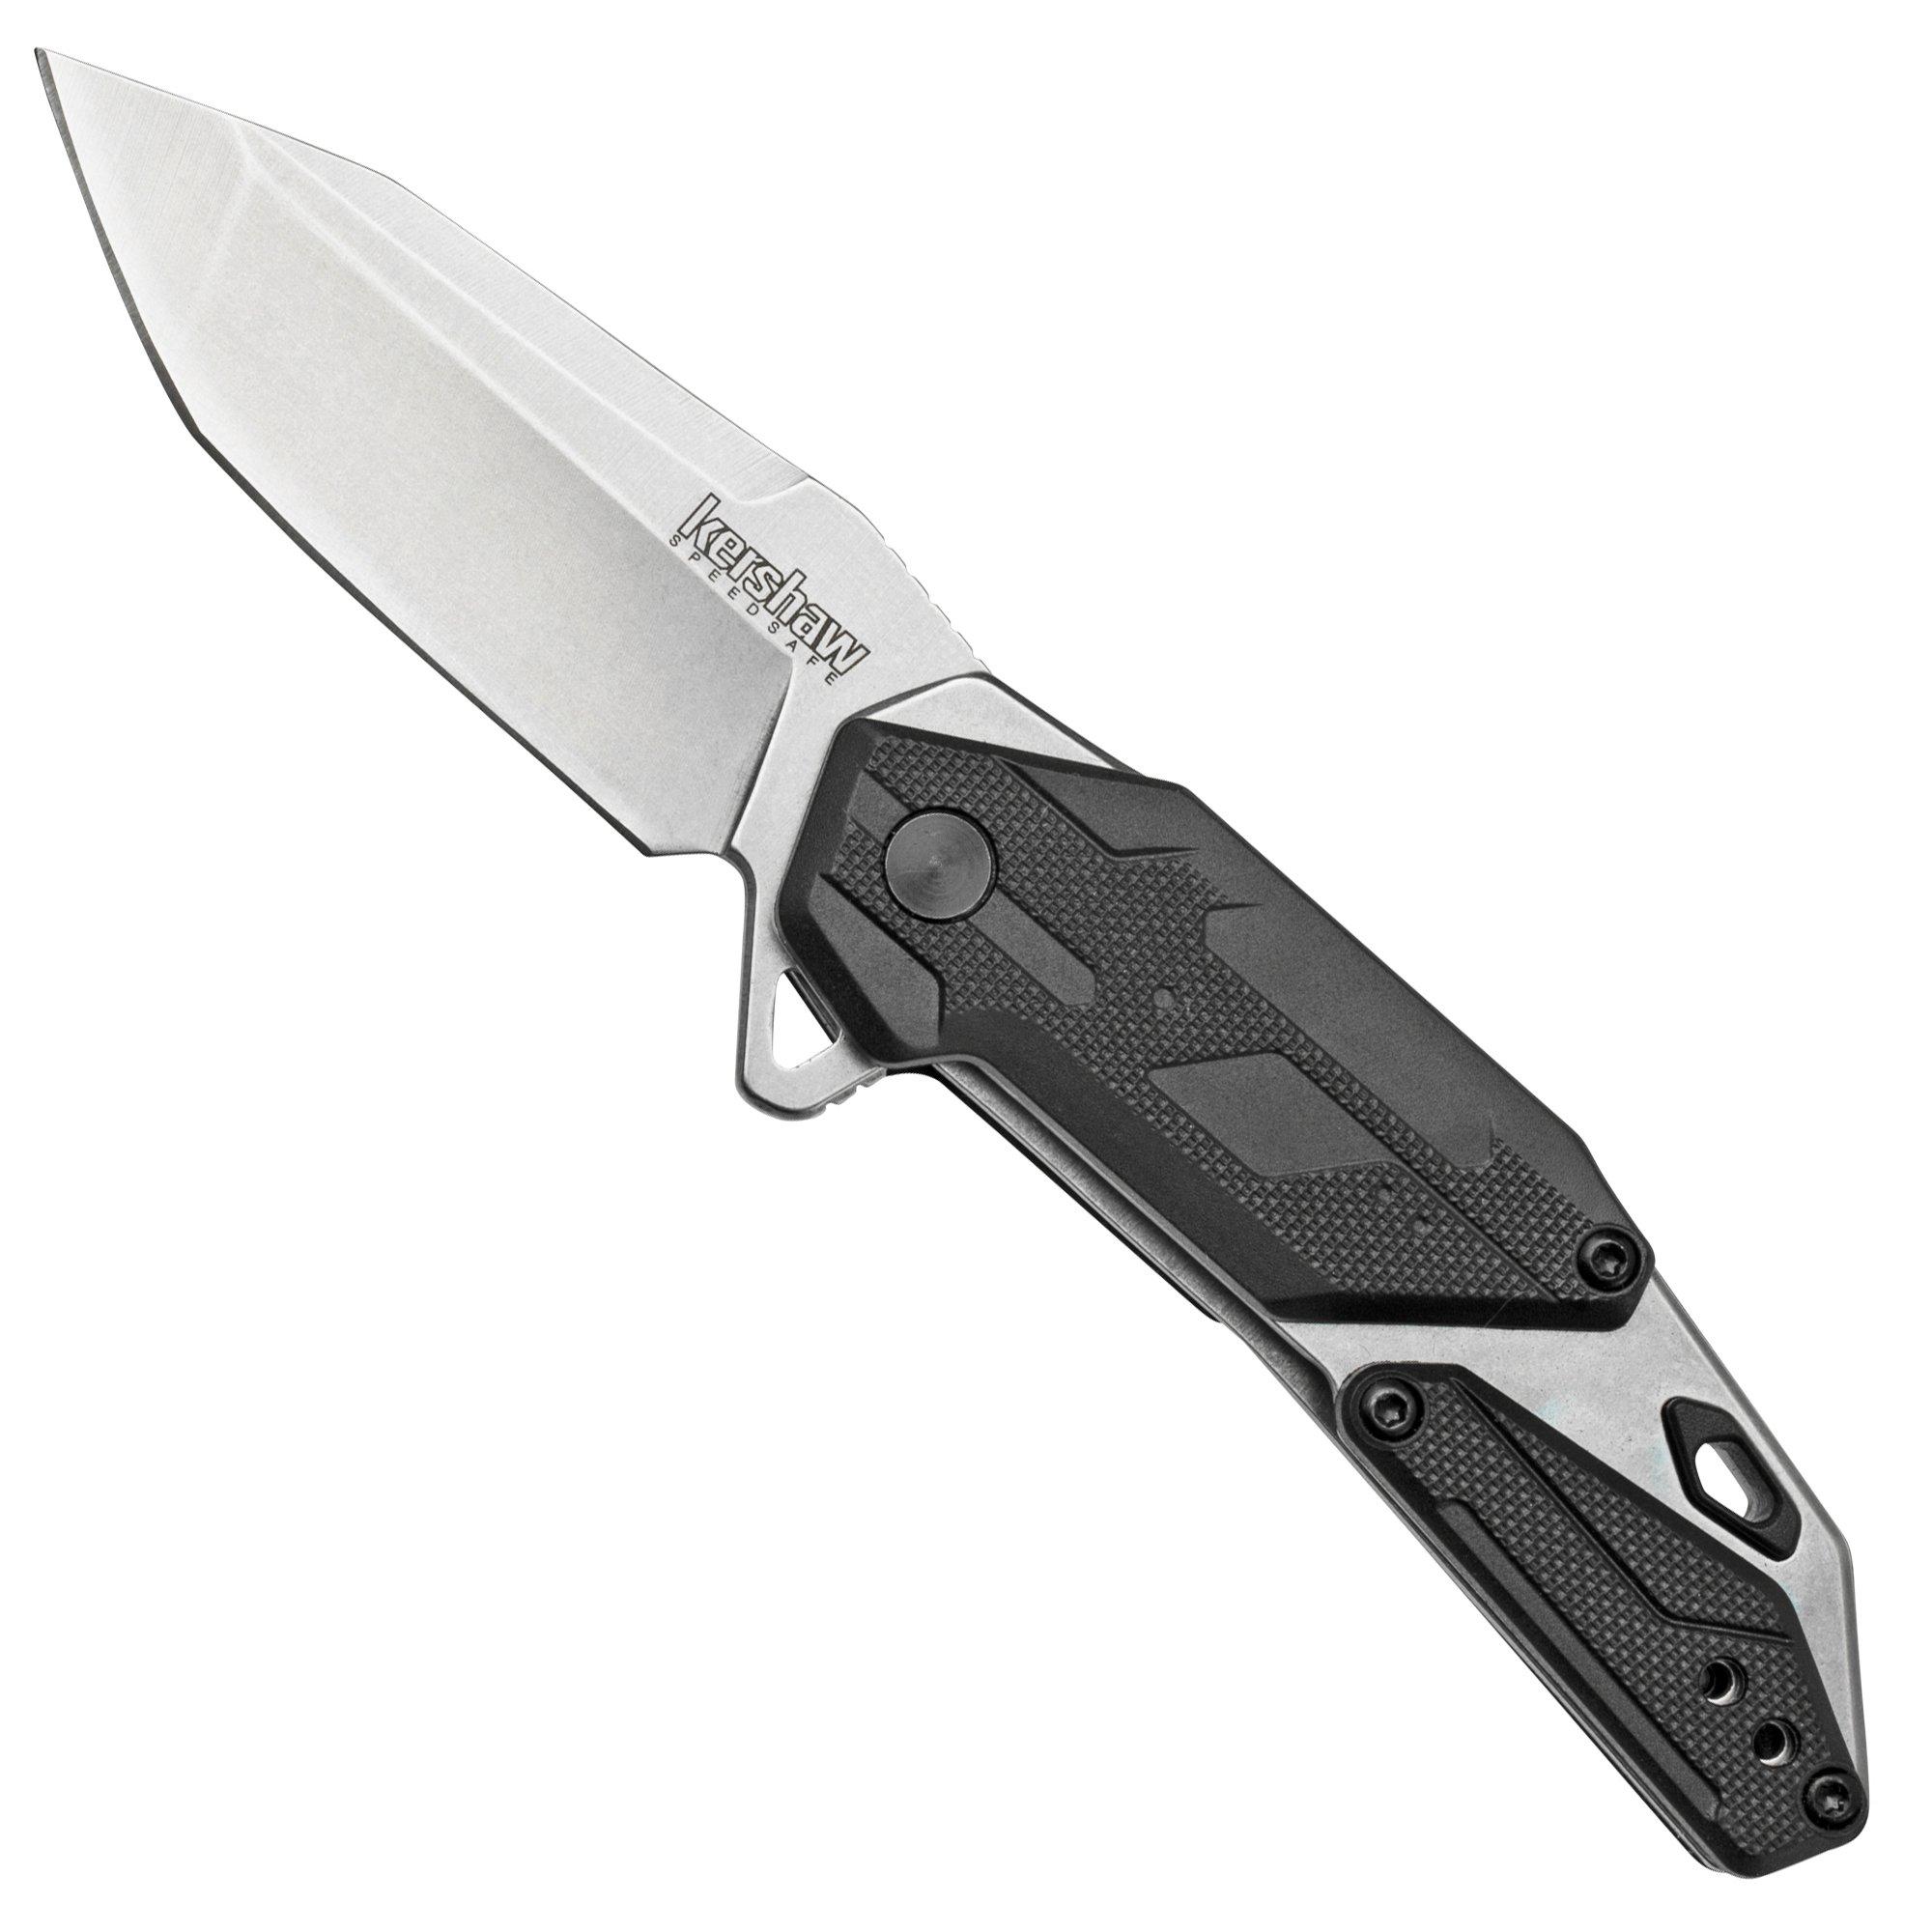 Kershaw Jetpack 1401 pocket knife  Advantageously shopping at